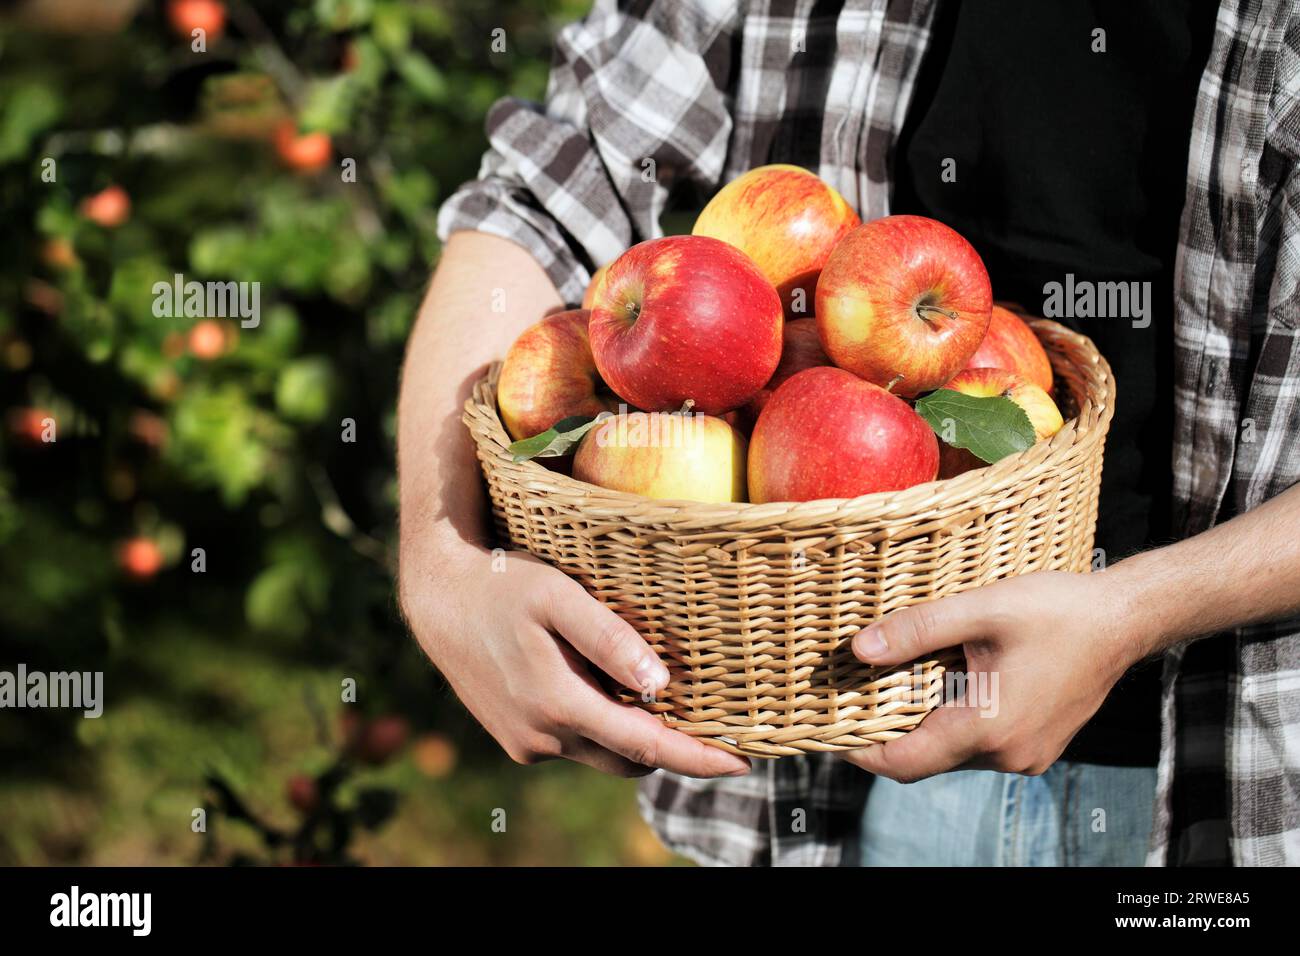 Farmer holding a wicker basket full of harvested apples Stock Photo